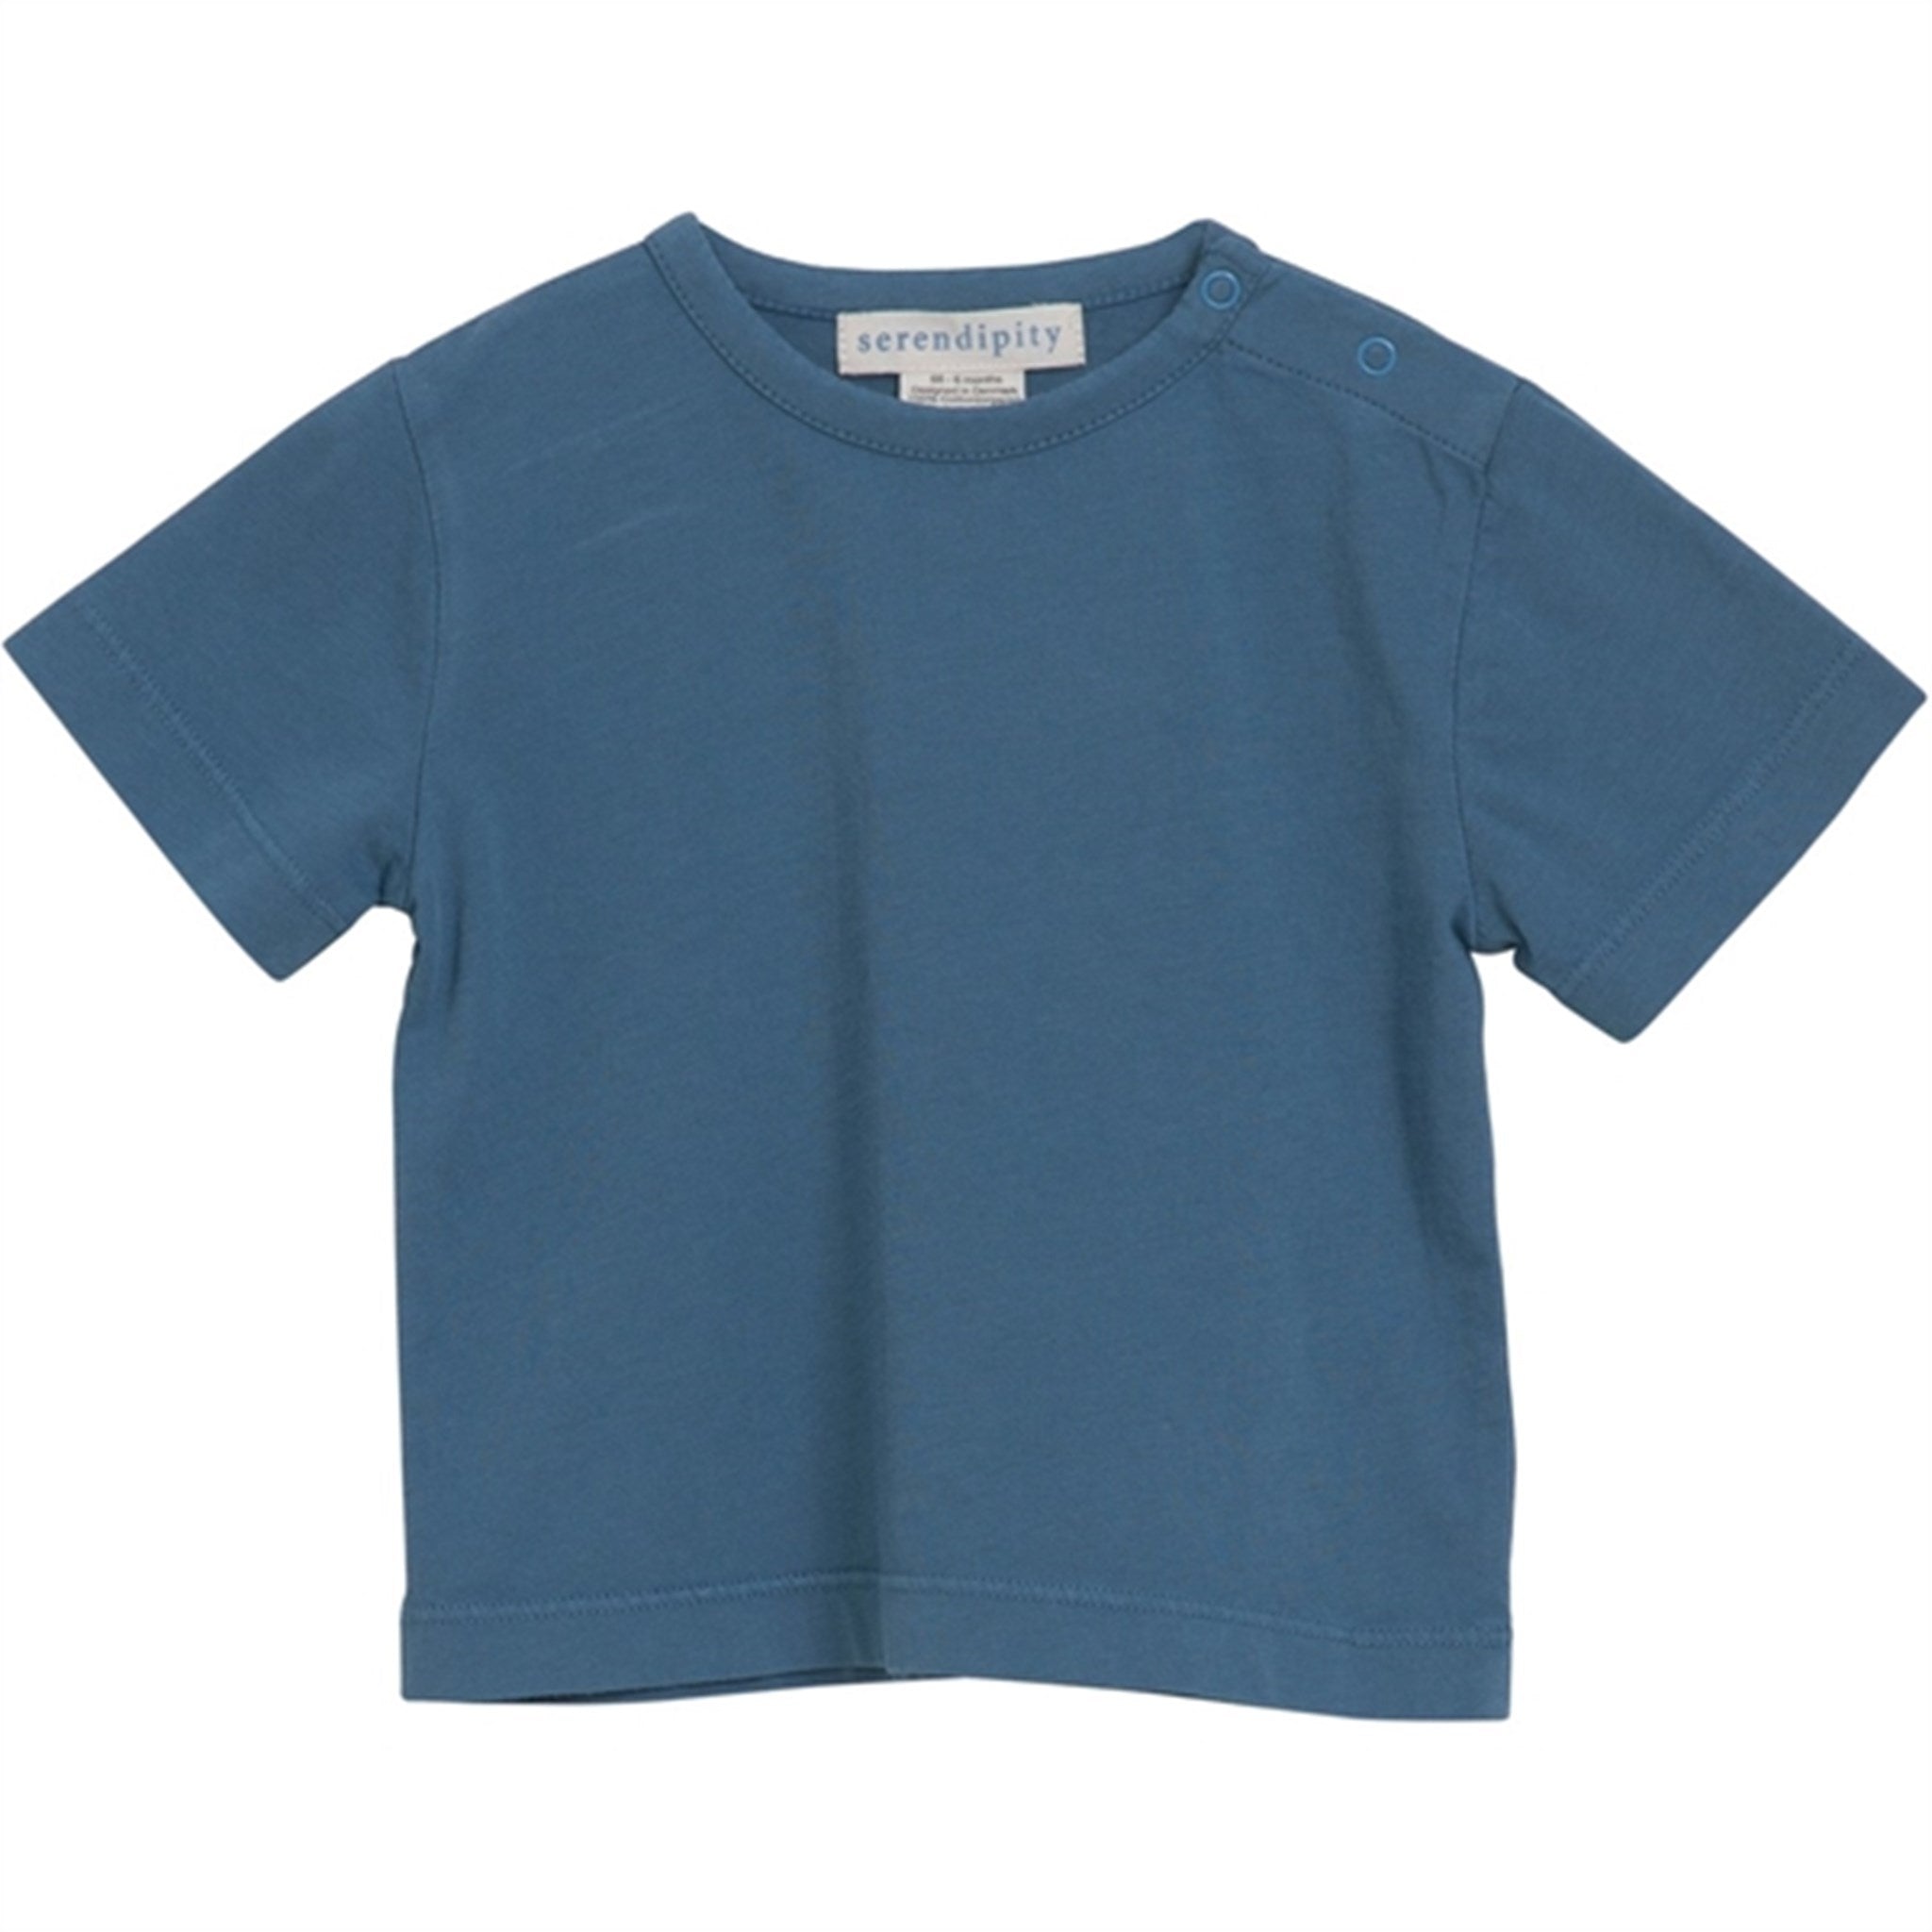 Serendipity Pale Blue Baby Jersey T-shirt - Str. 86 cm